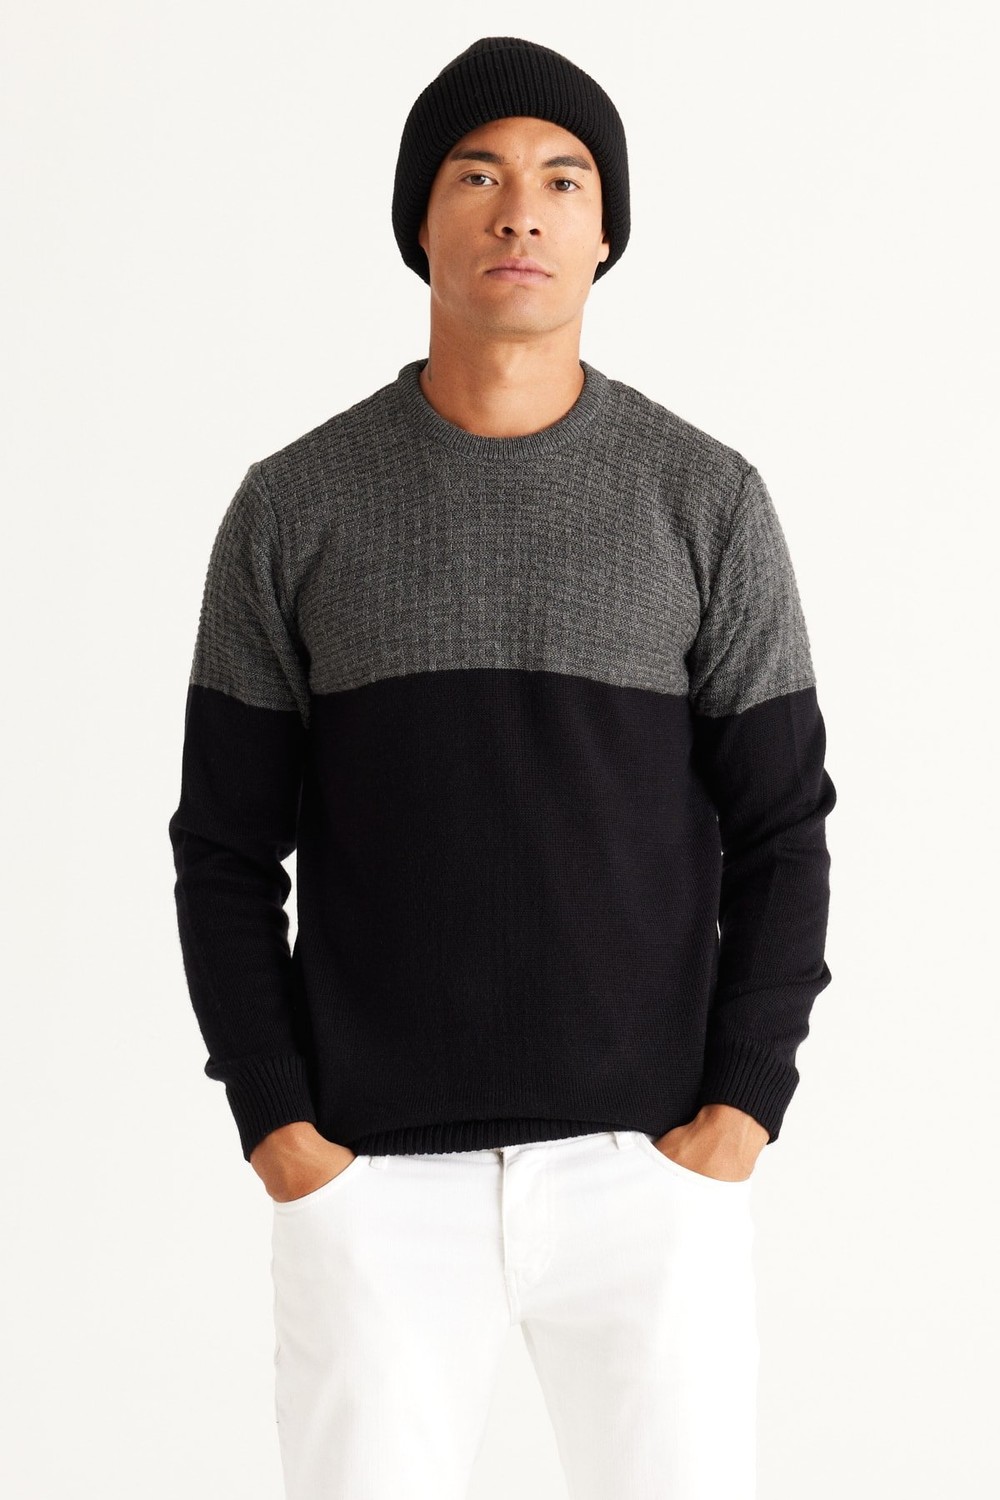 AC&Co / Altınyıldız Classics Men's Anthracite-black Standard Fit Normal Cut Crew Neck Colorblok Patterned Knitwear Sweater.